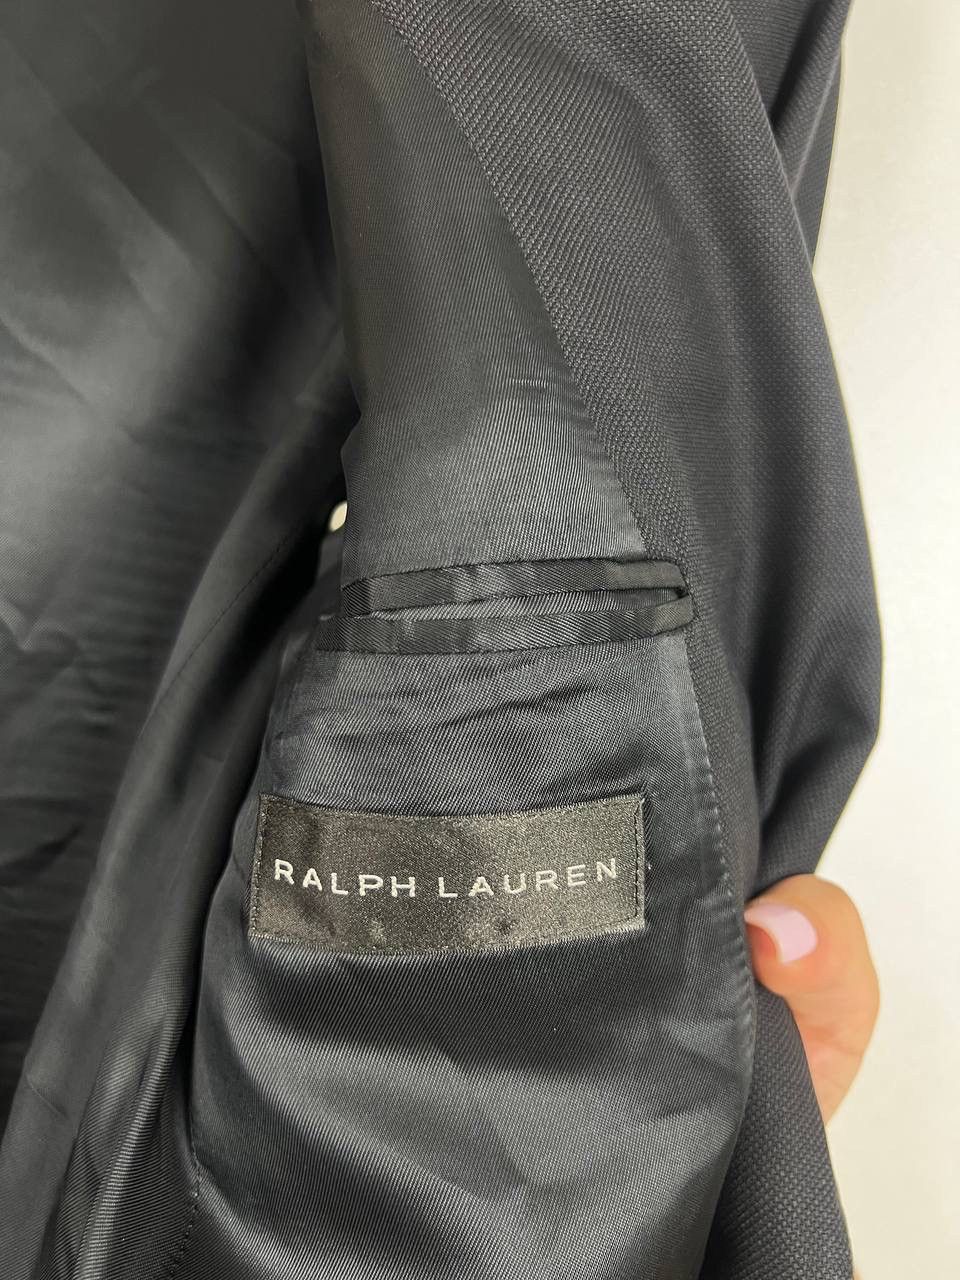 Polo Ralph Lauren Polo Ralph Lauren Black Label luxury blazer size 38 R Size 38R - 2 Preview